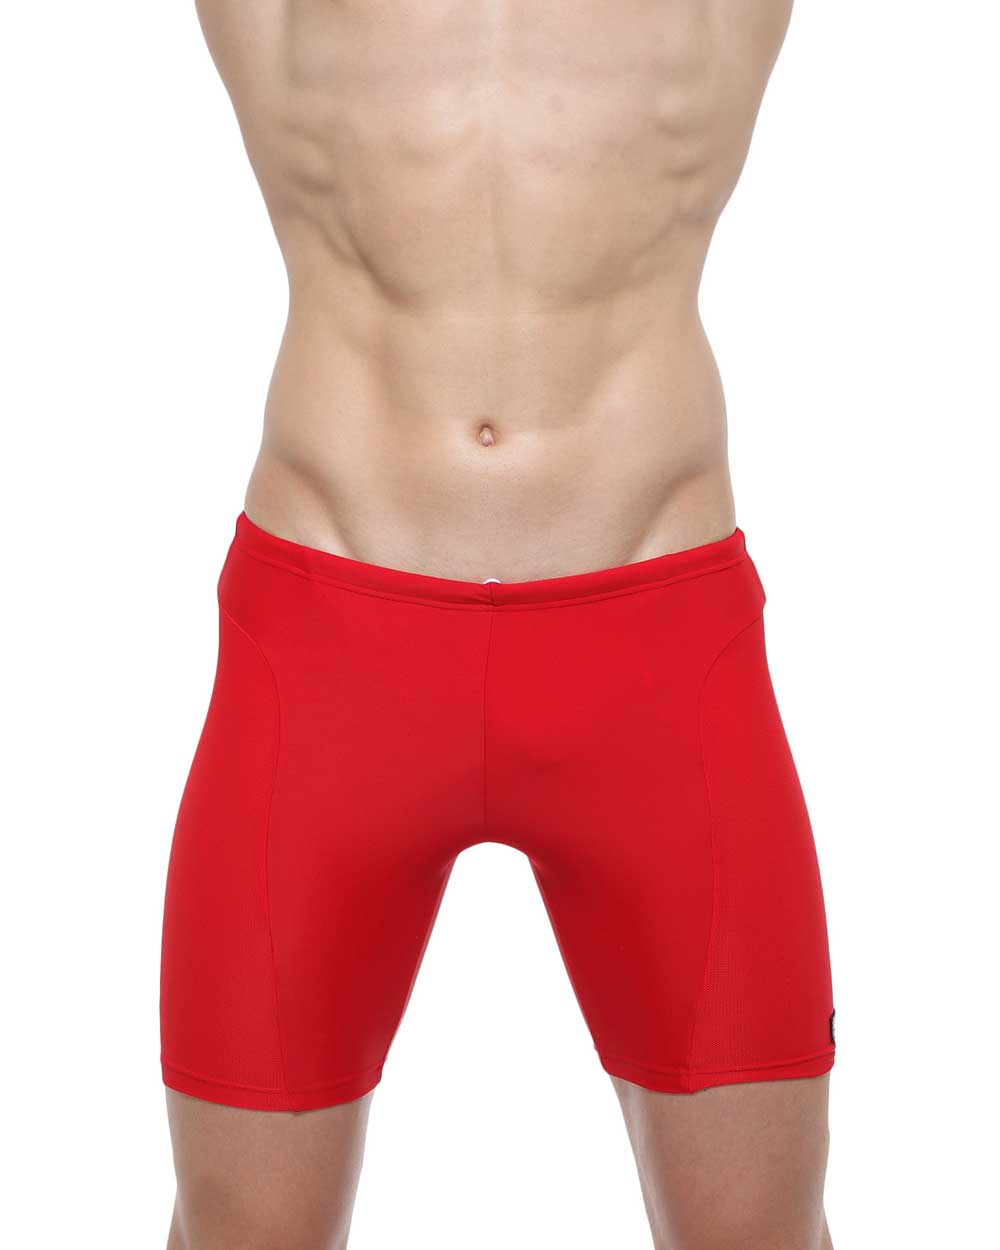 Swimwear Fit Jammer - Red [3225]